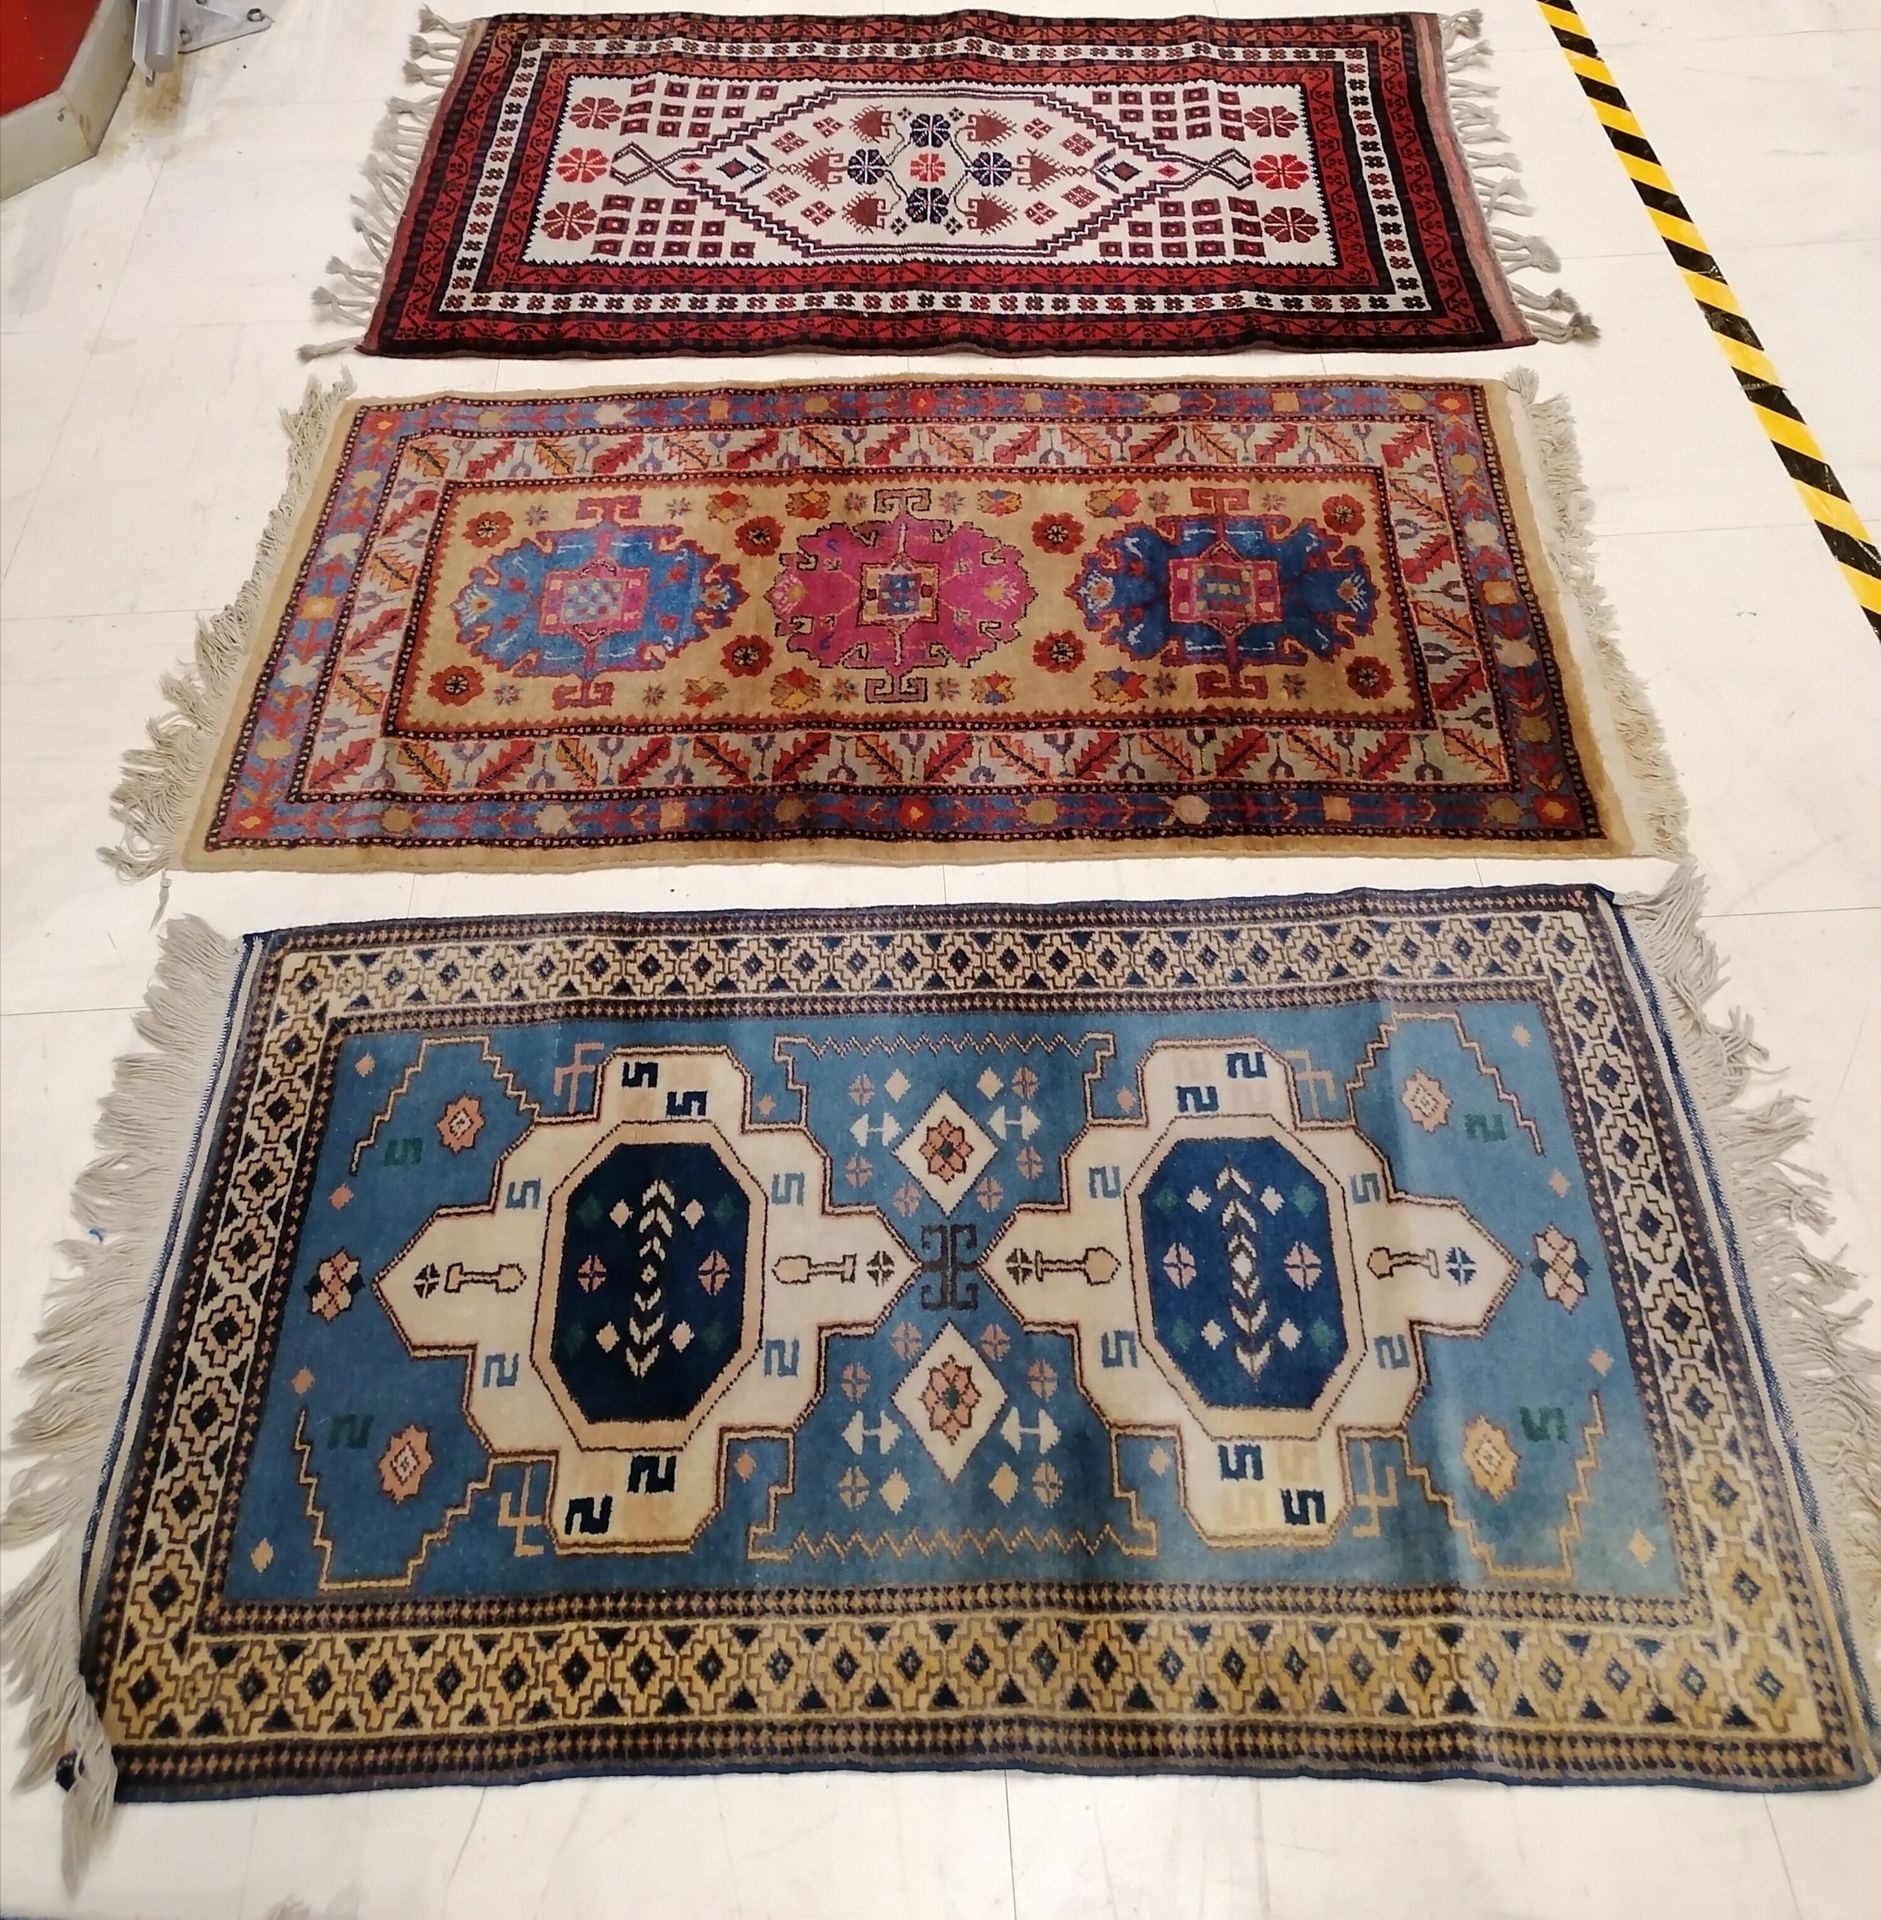 Null 三条几何装饰和不同颜色的地毯 高80 x 宽143厘米 - 磨损和撕裂